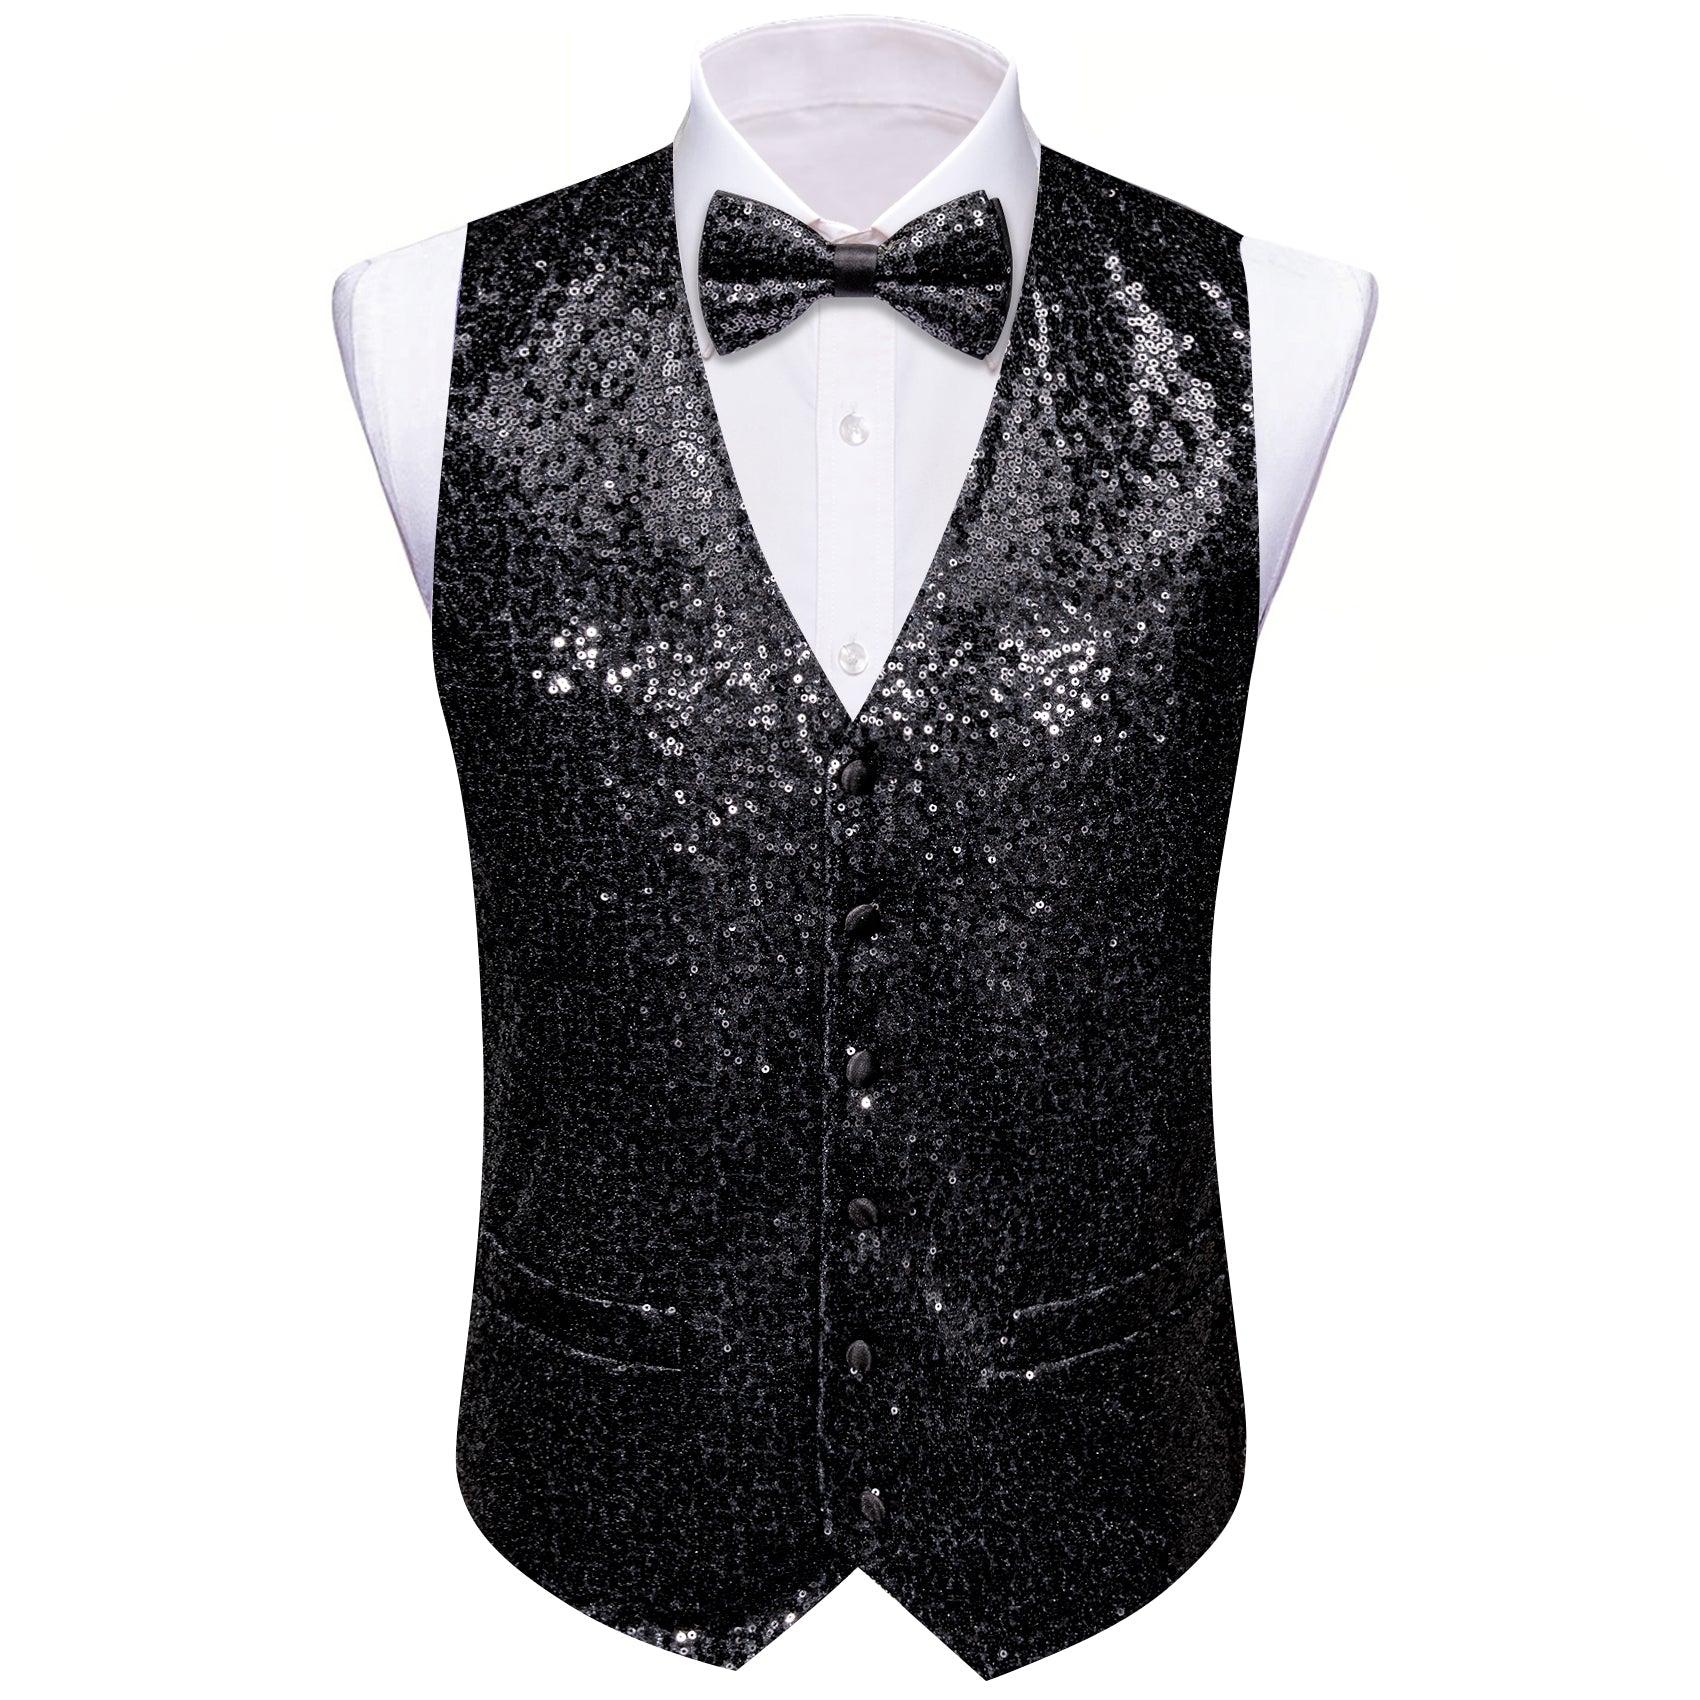 Barry.wang Men's Vest Shining Black Bow tie Waistcoat Vest Set for Party